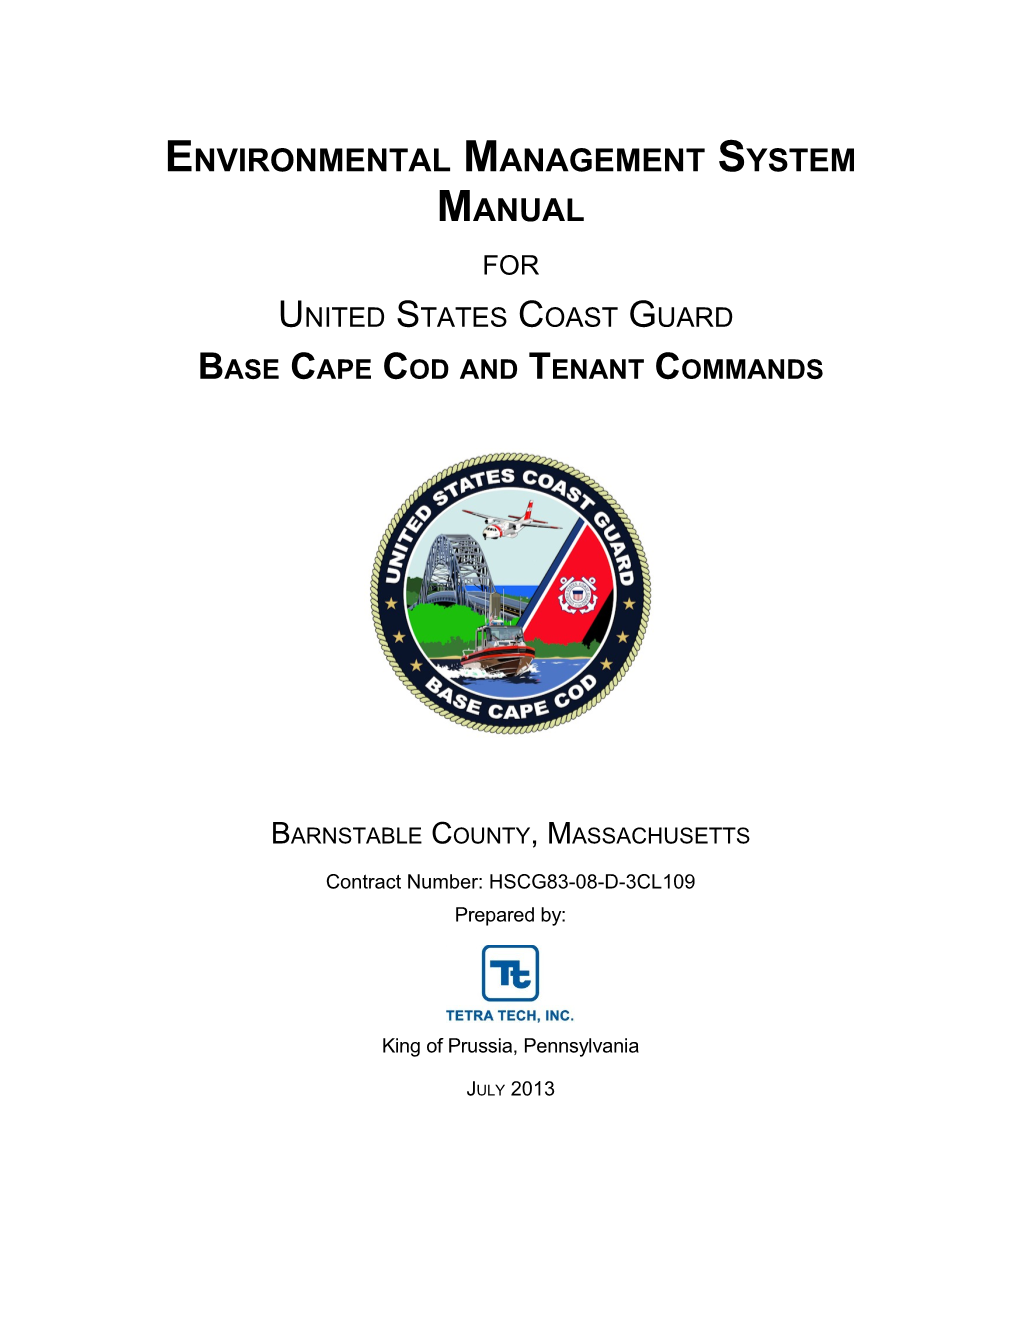 Air Station Cape Cod Natural Resources Management Plan